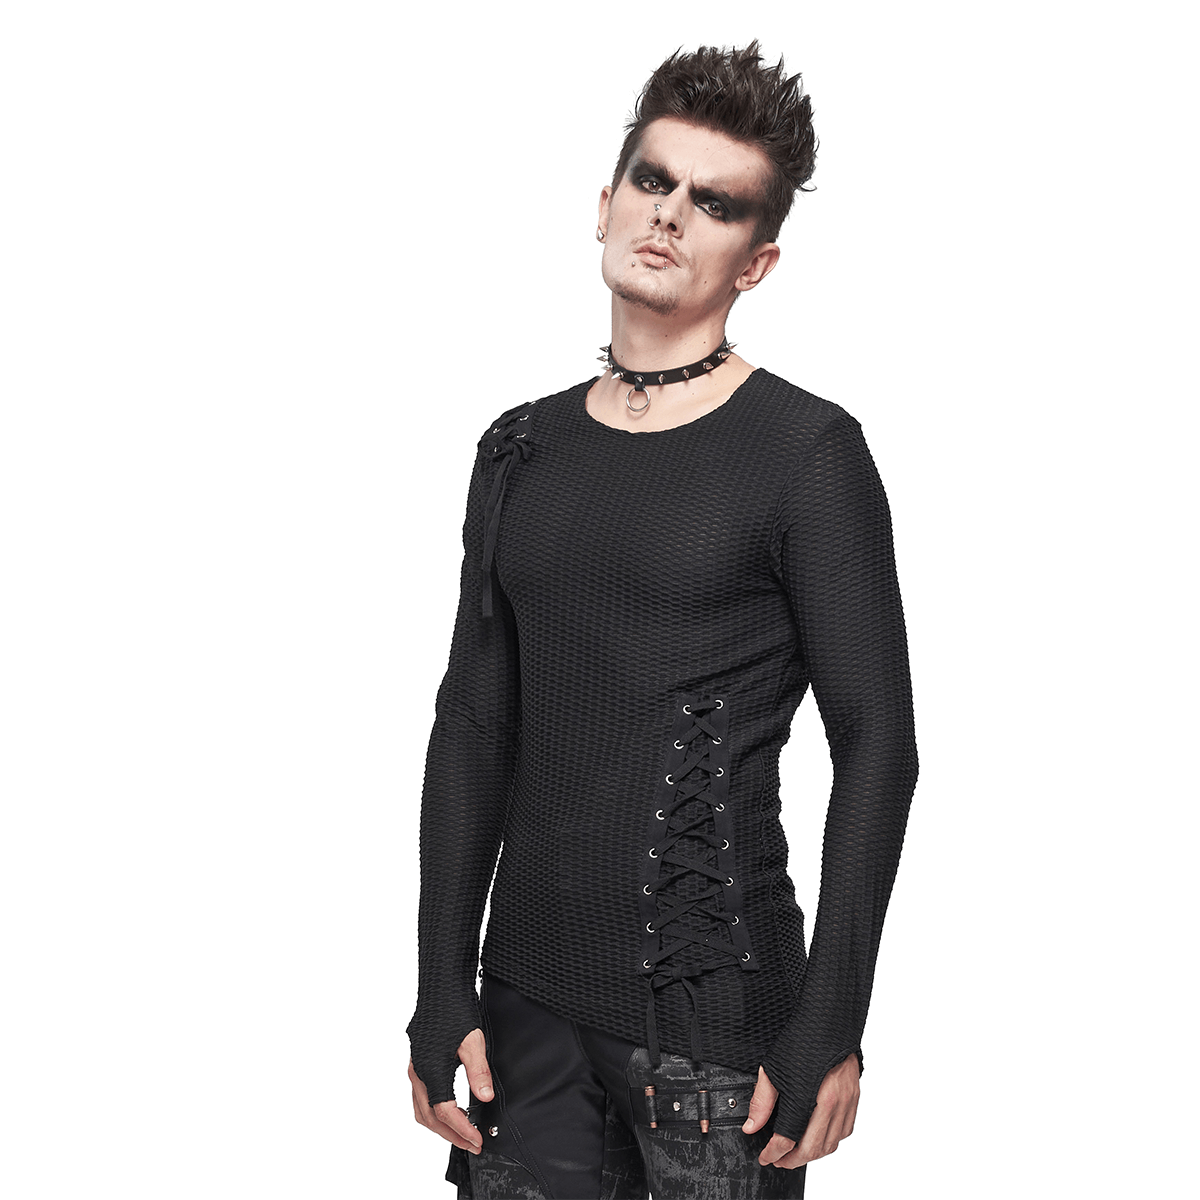 Gothic Punk Asymmetric Sweatshirt with Lace Up / Male Mesh Long Sleeve Black Top - HARD'N'HEAVY